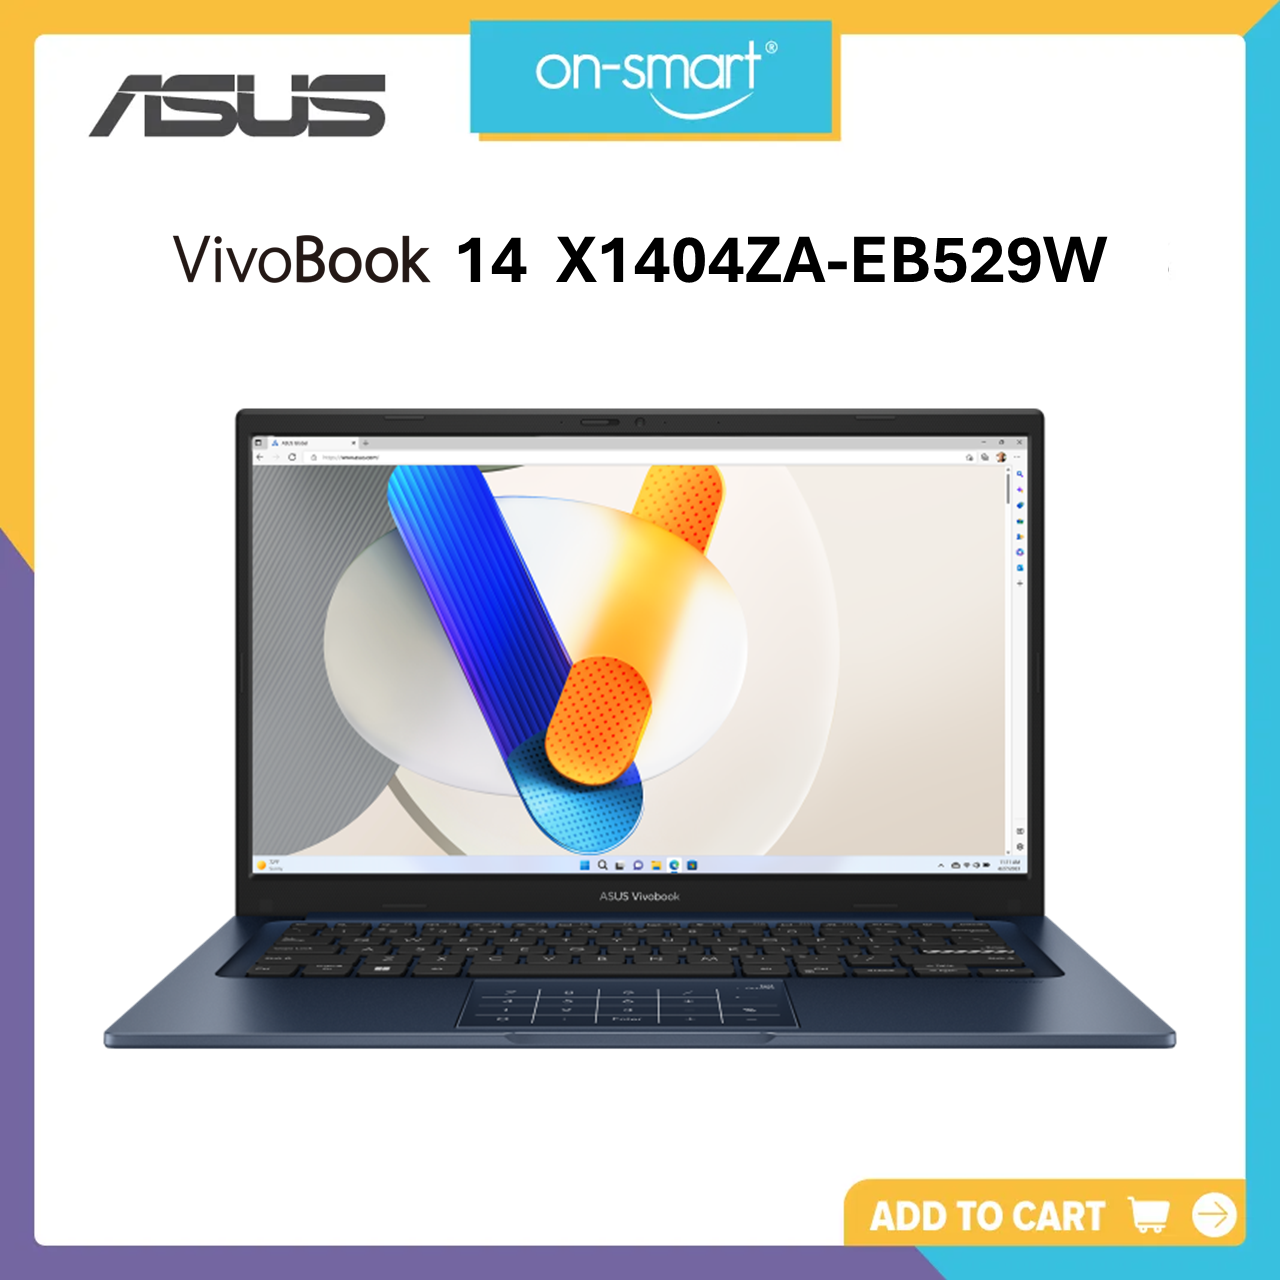 ASUS Vivobook 14 X1404ZA-EB529W